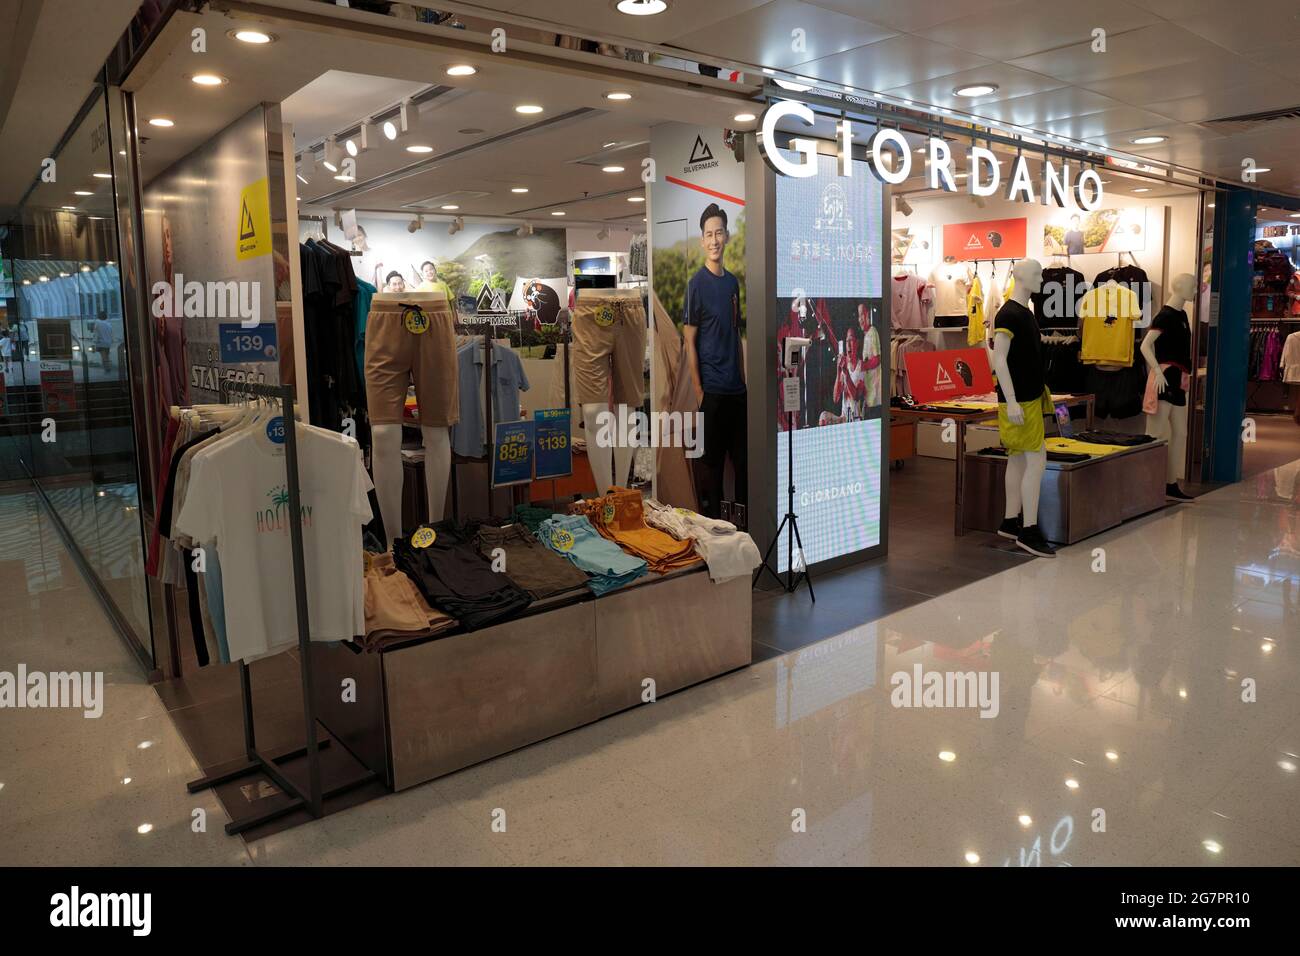 Giordano Clothing Store, Metropolis Plaza, Sheung Shui, New Territories, Hong Kong 15 juillet 2021 Banque D'Images